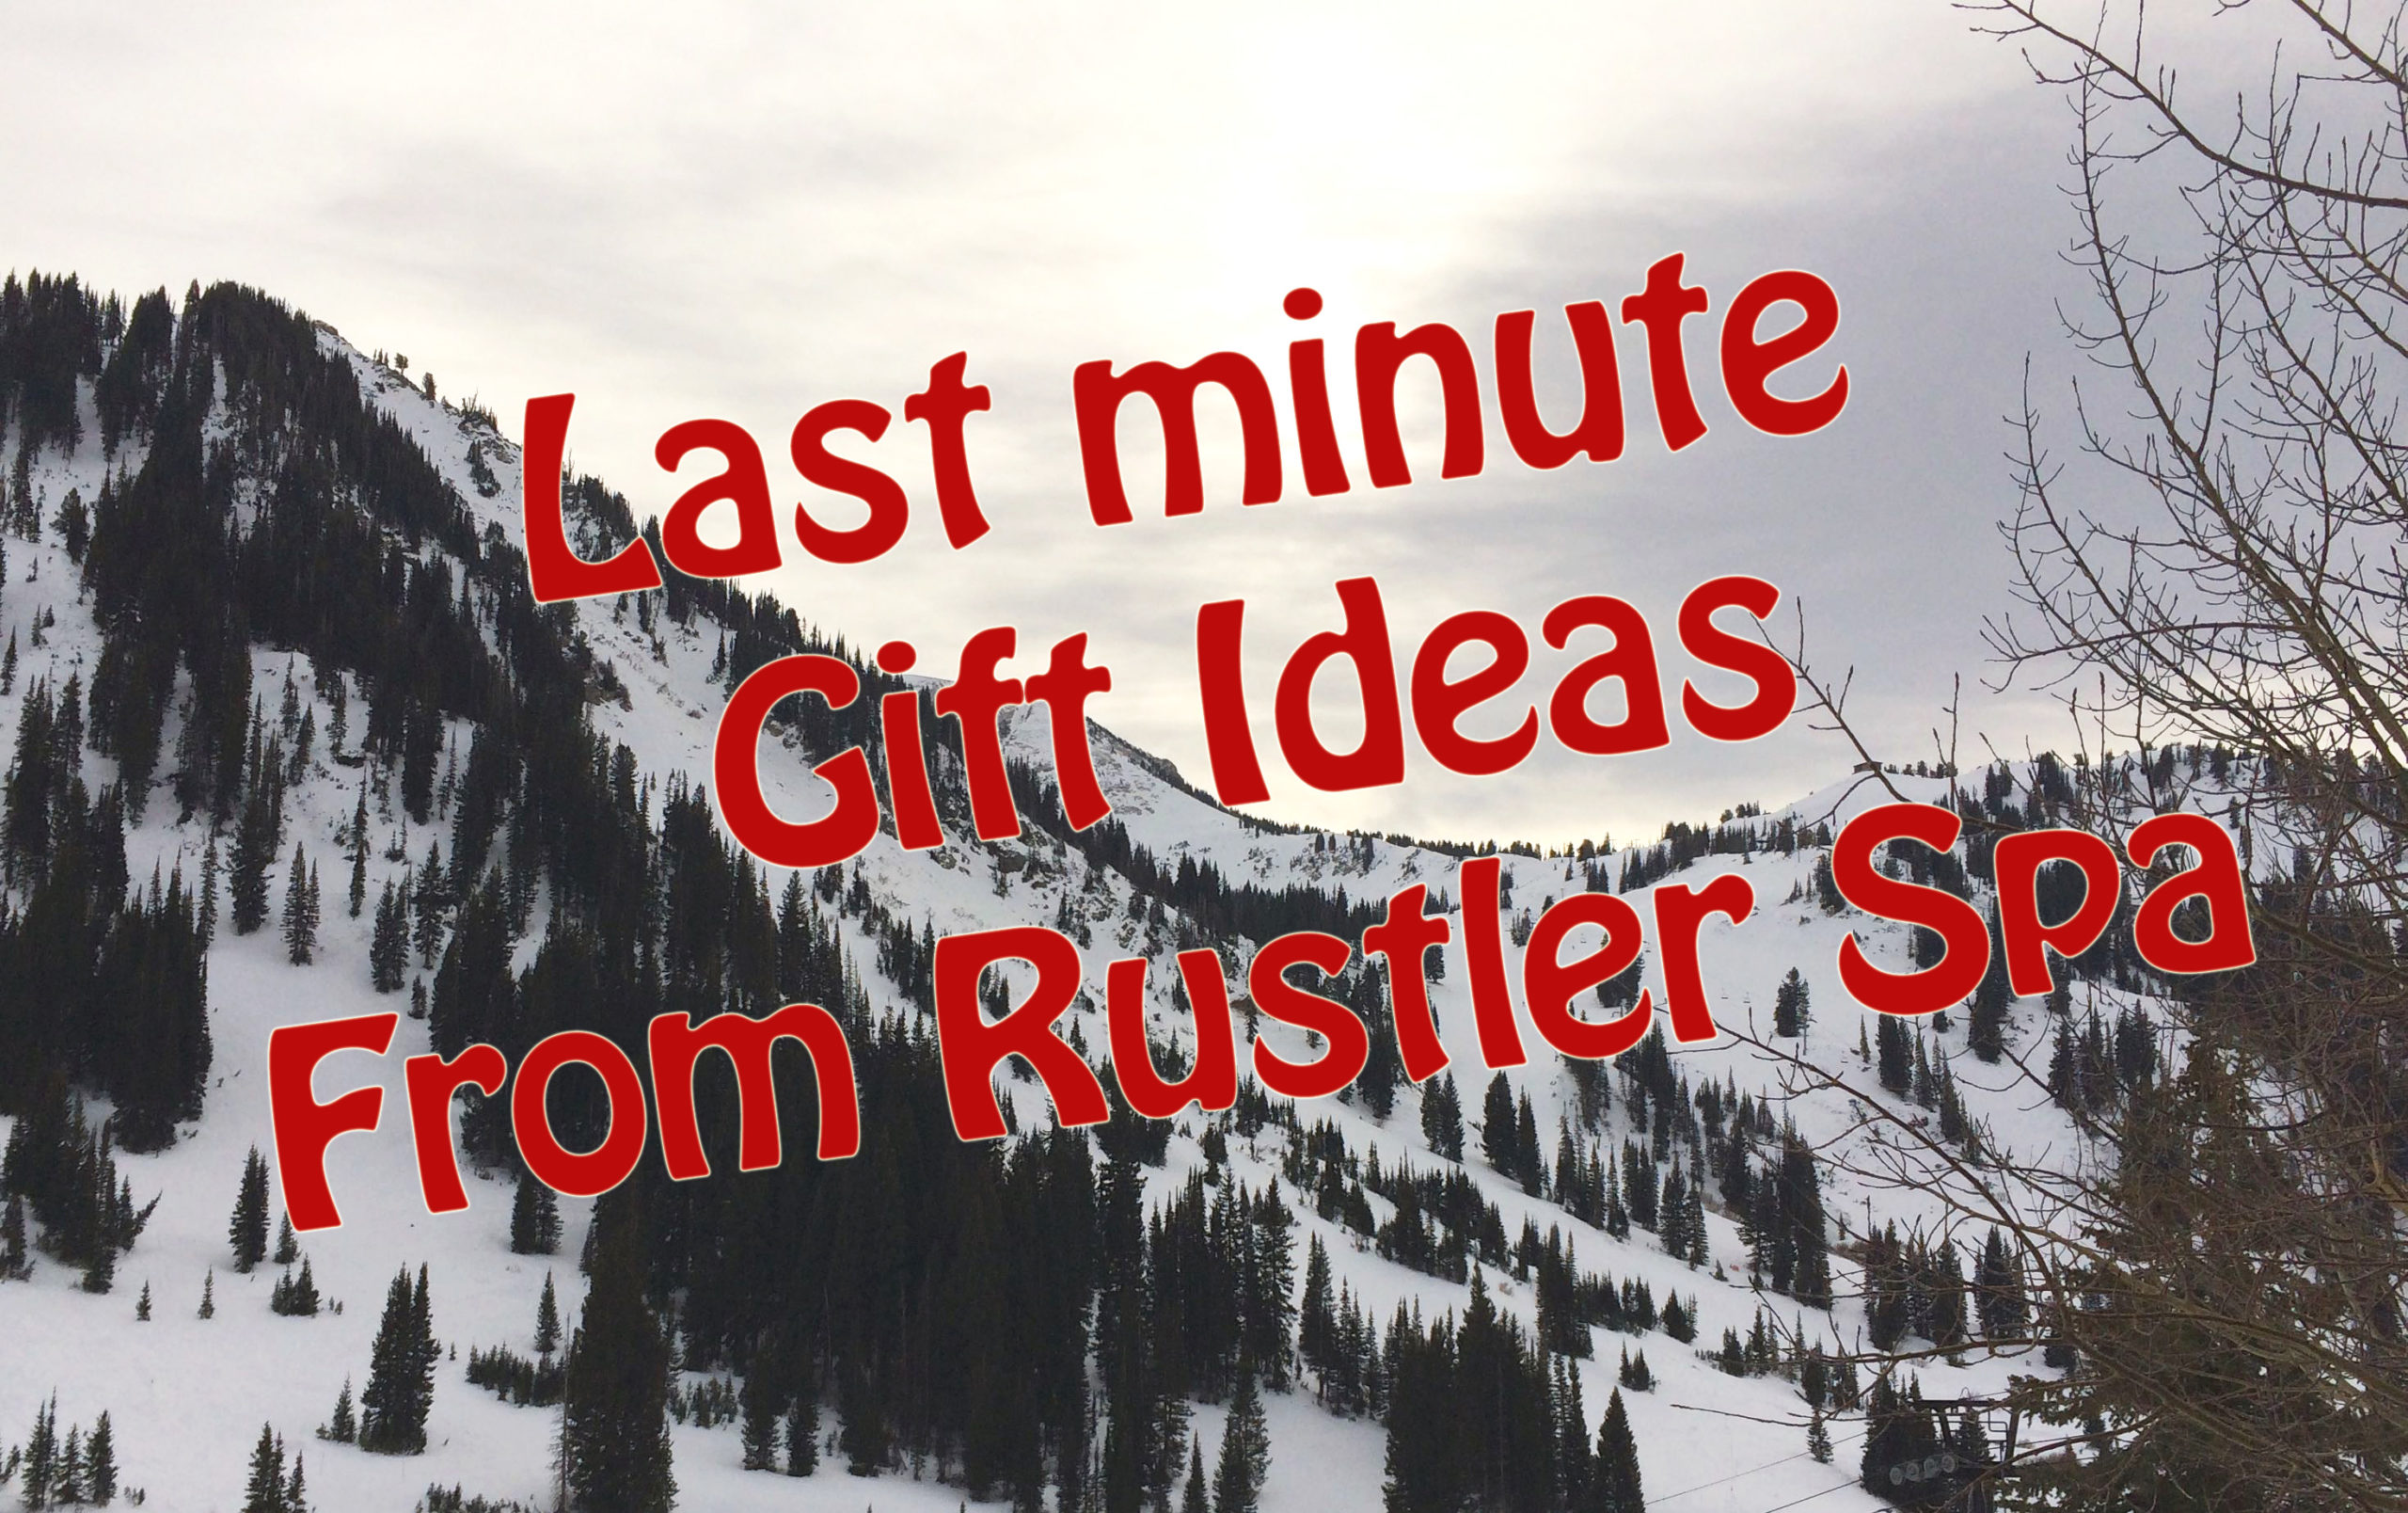 Last minute gift ideas guaranteed to please!